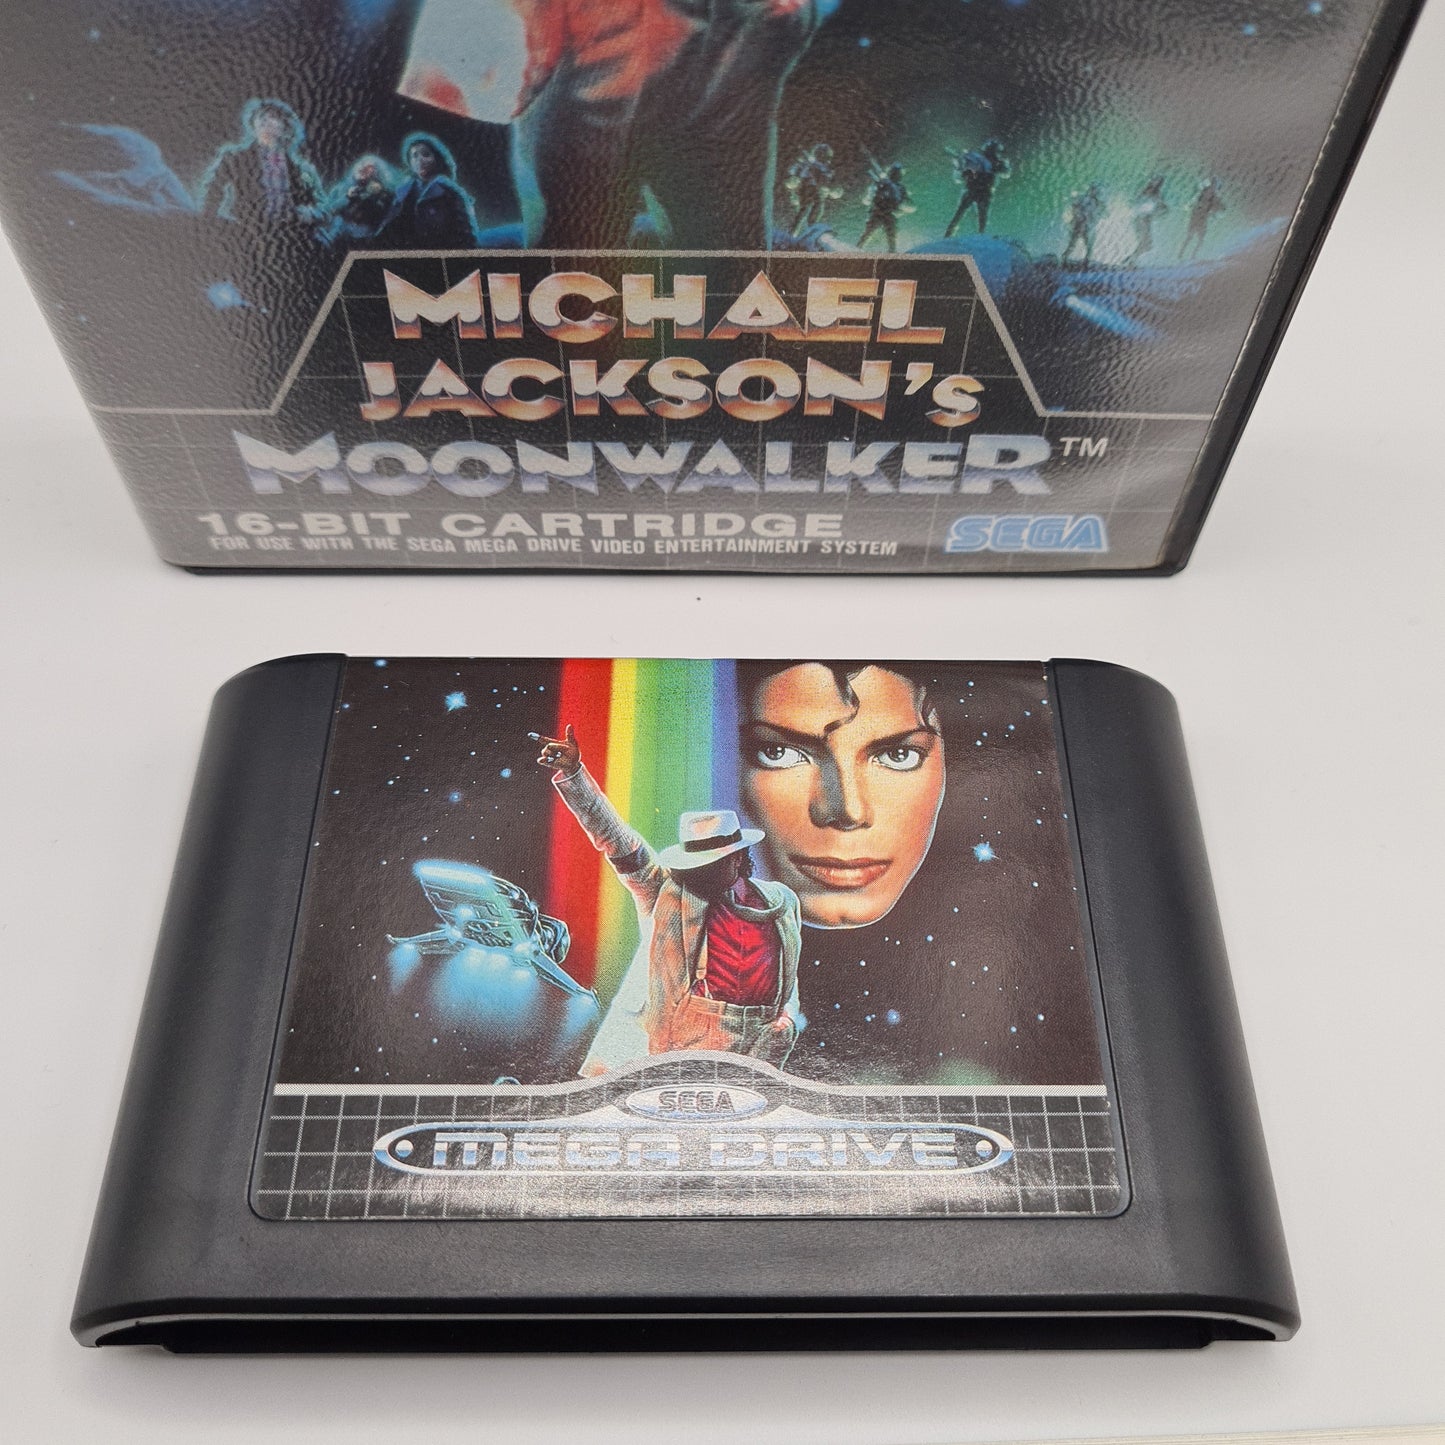 Moonwalker "Michael Jackson" Sega Mega Drive W3